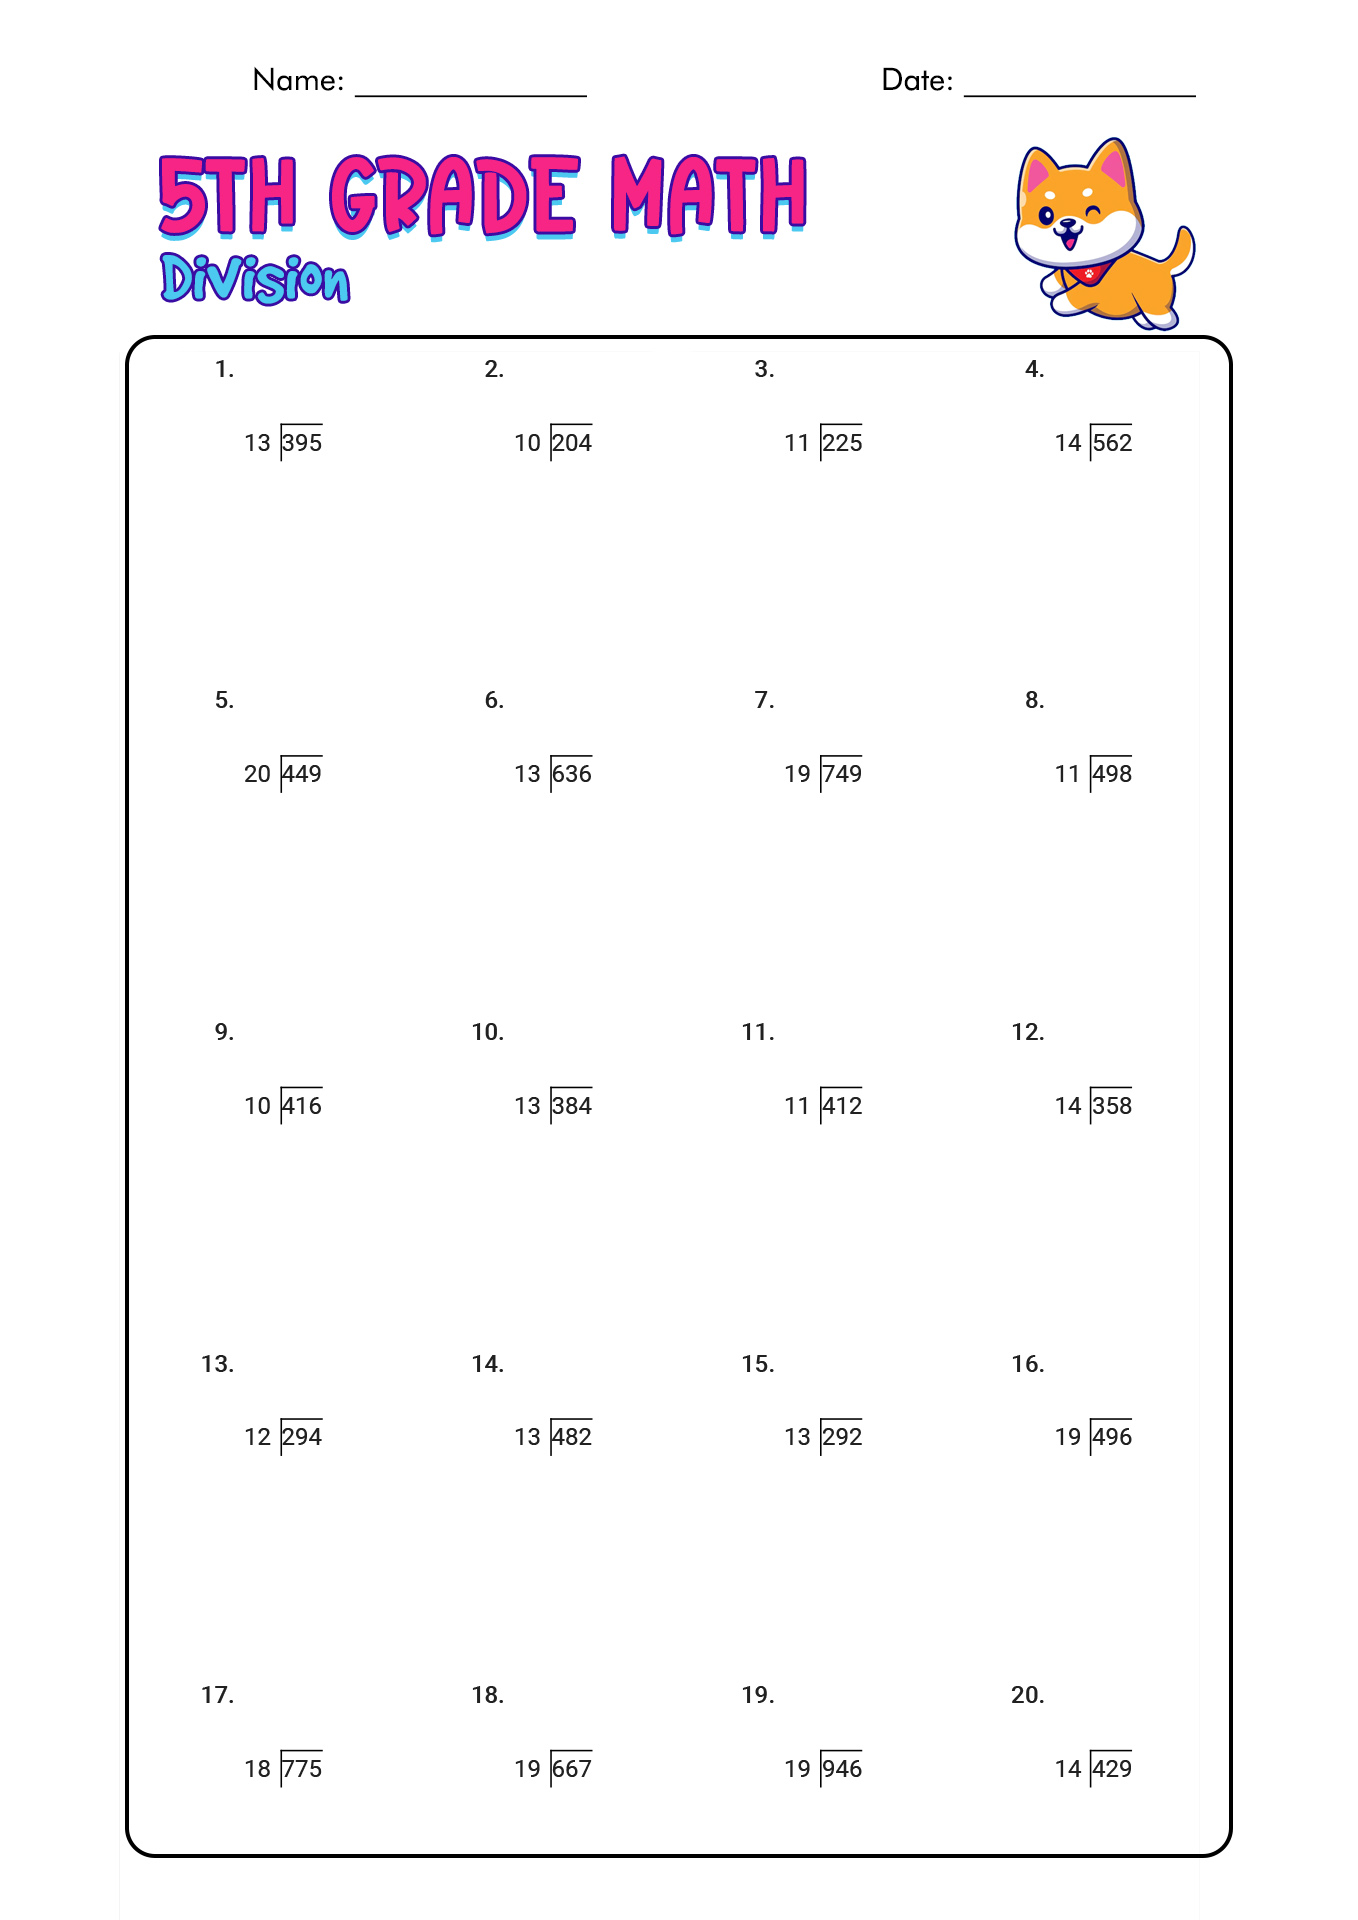 5th Grade Division Math Worksheets Printable Image